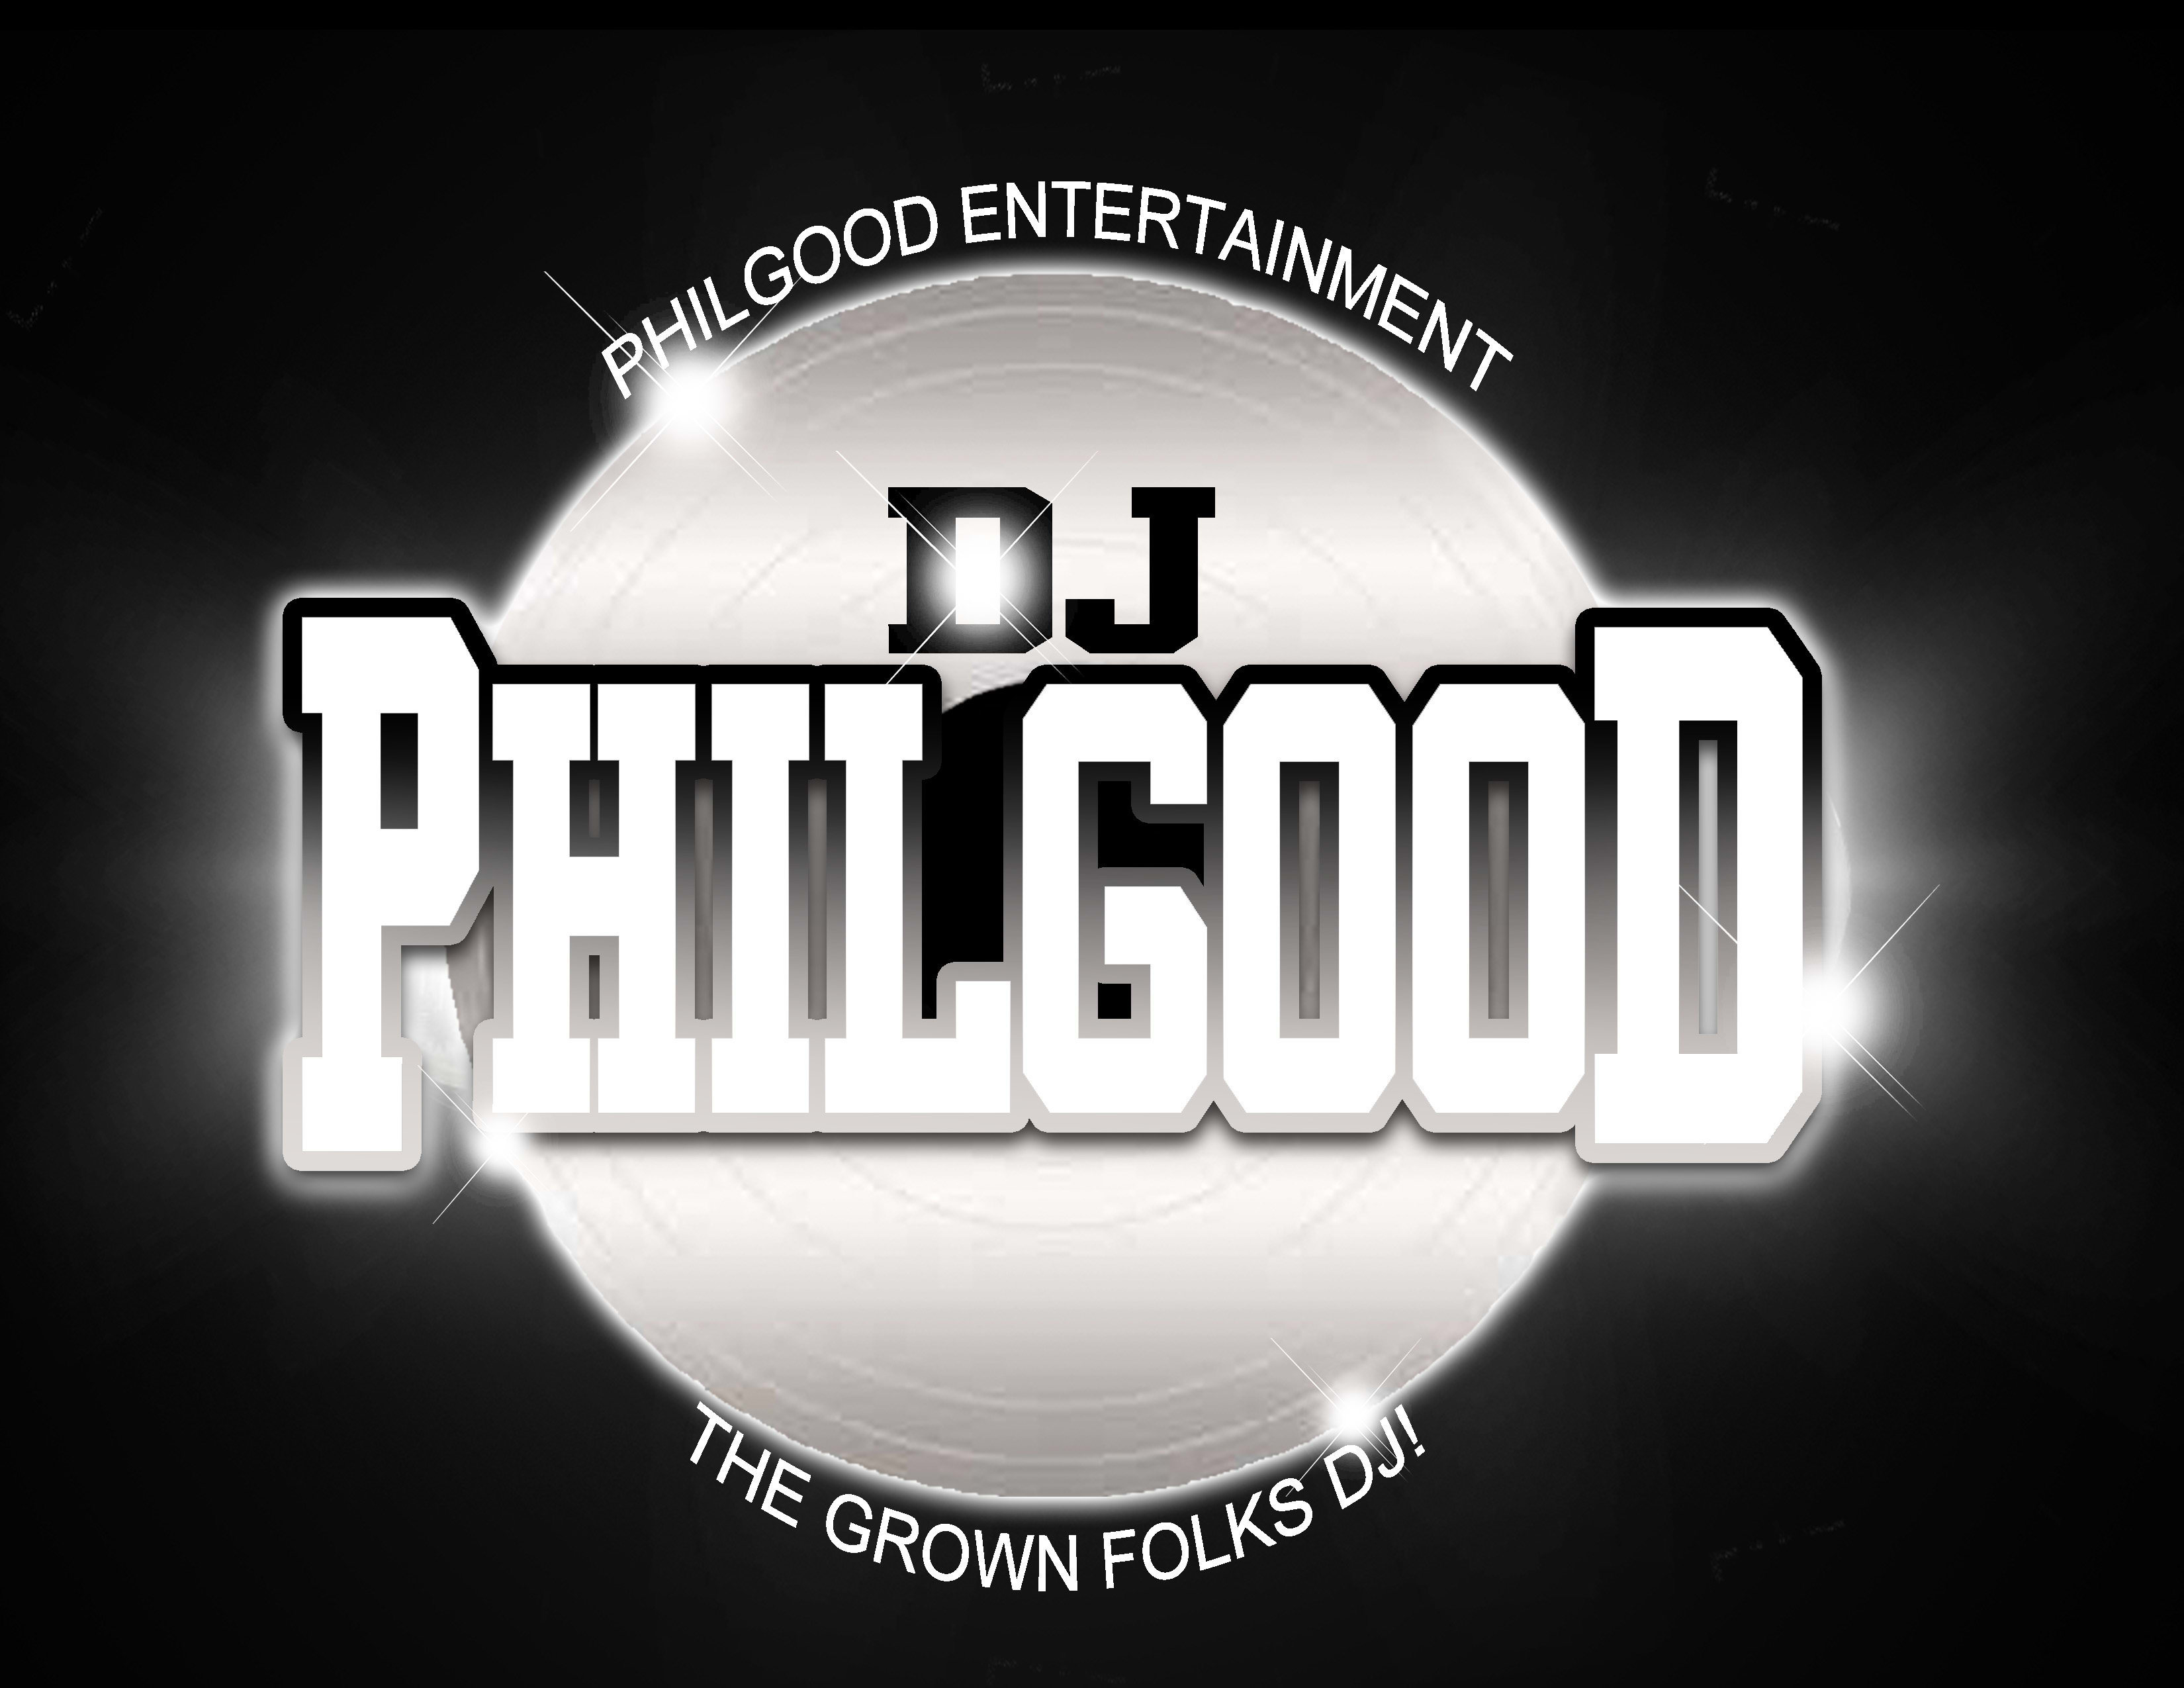 Philgood Entertainment